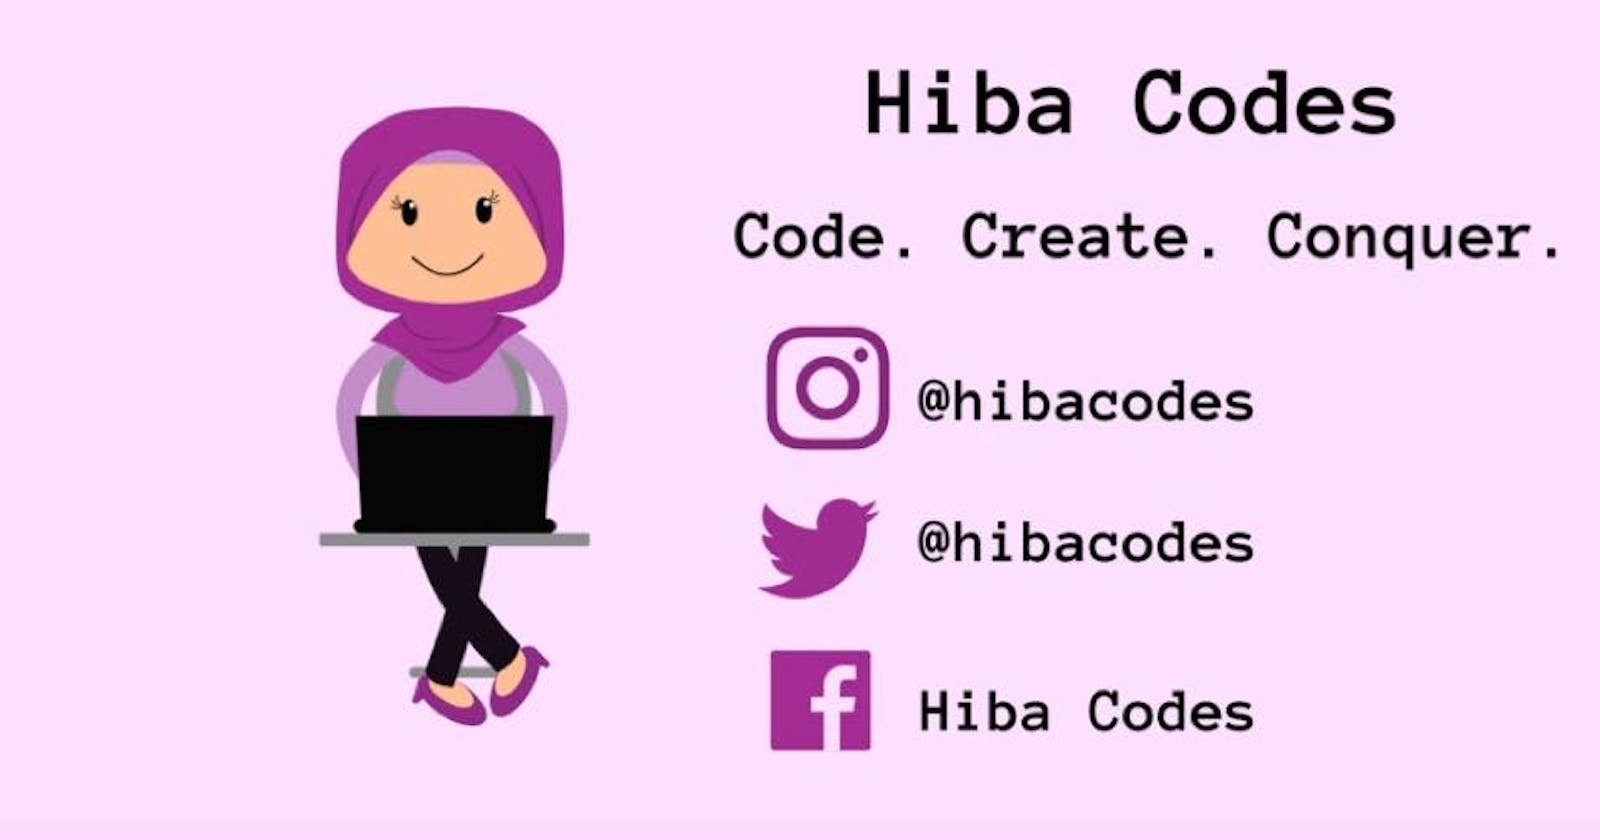 Welcome to my blog: Hiba Codes!